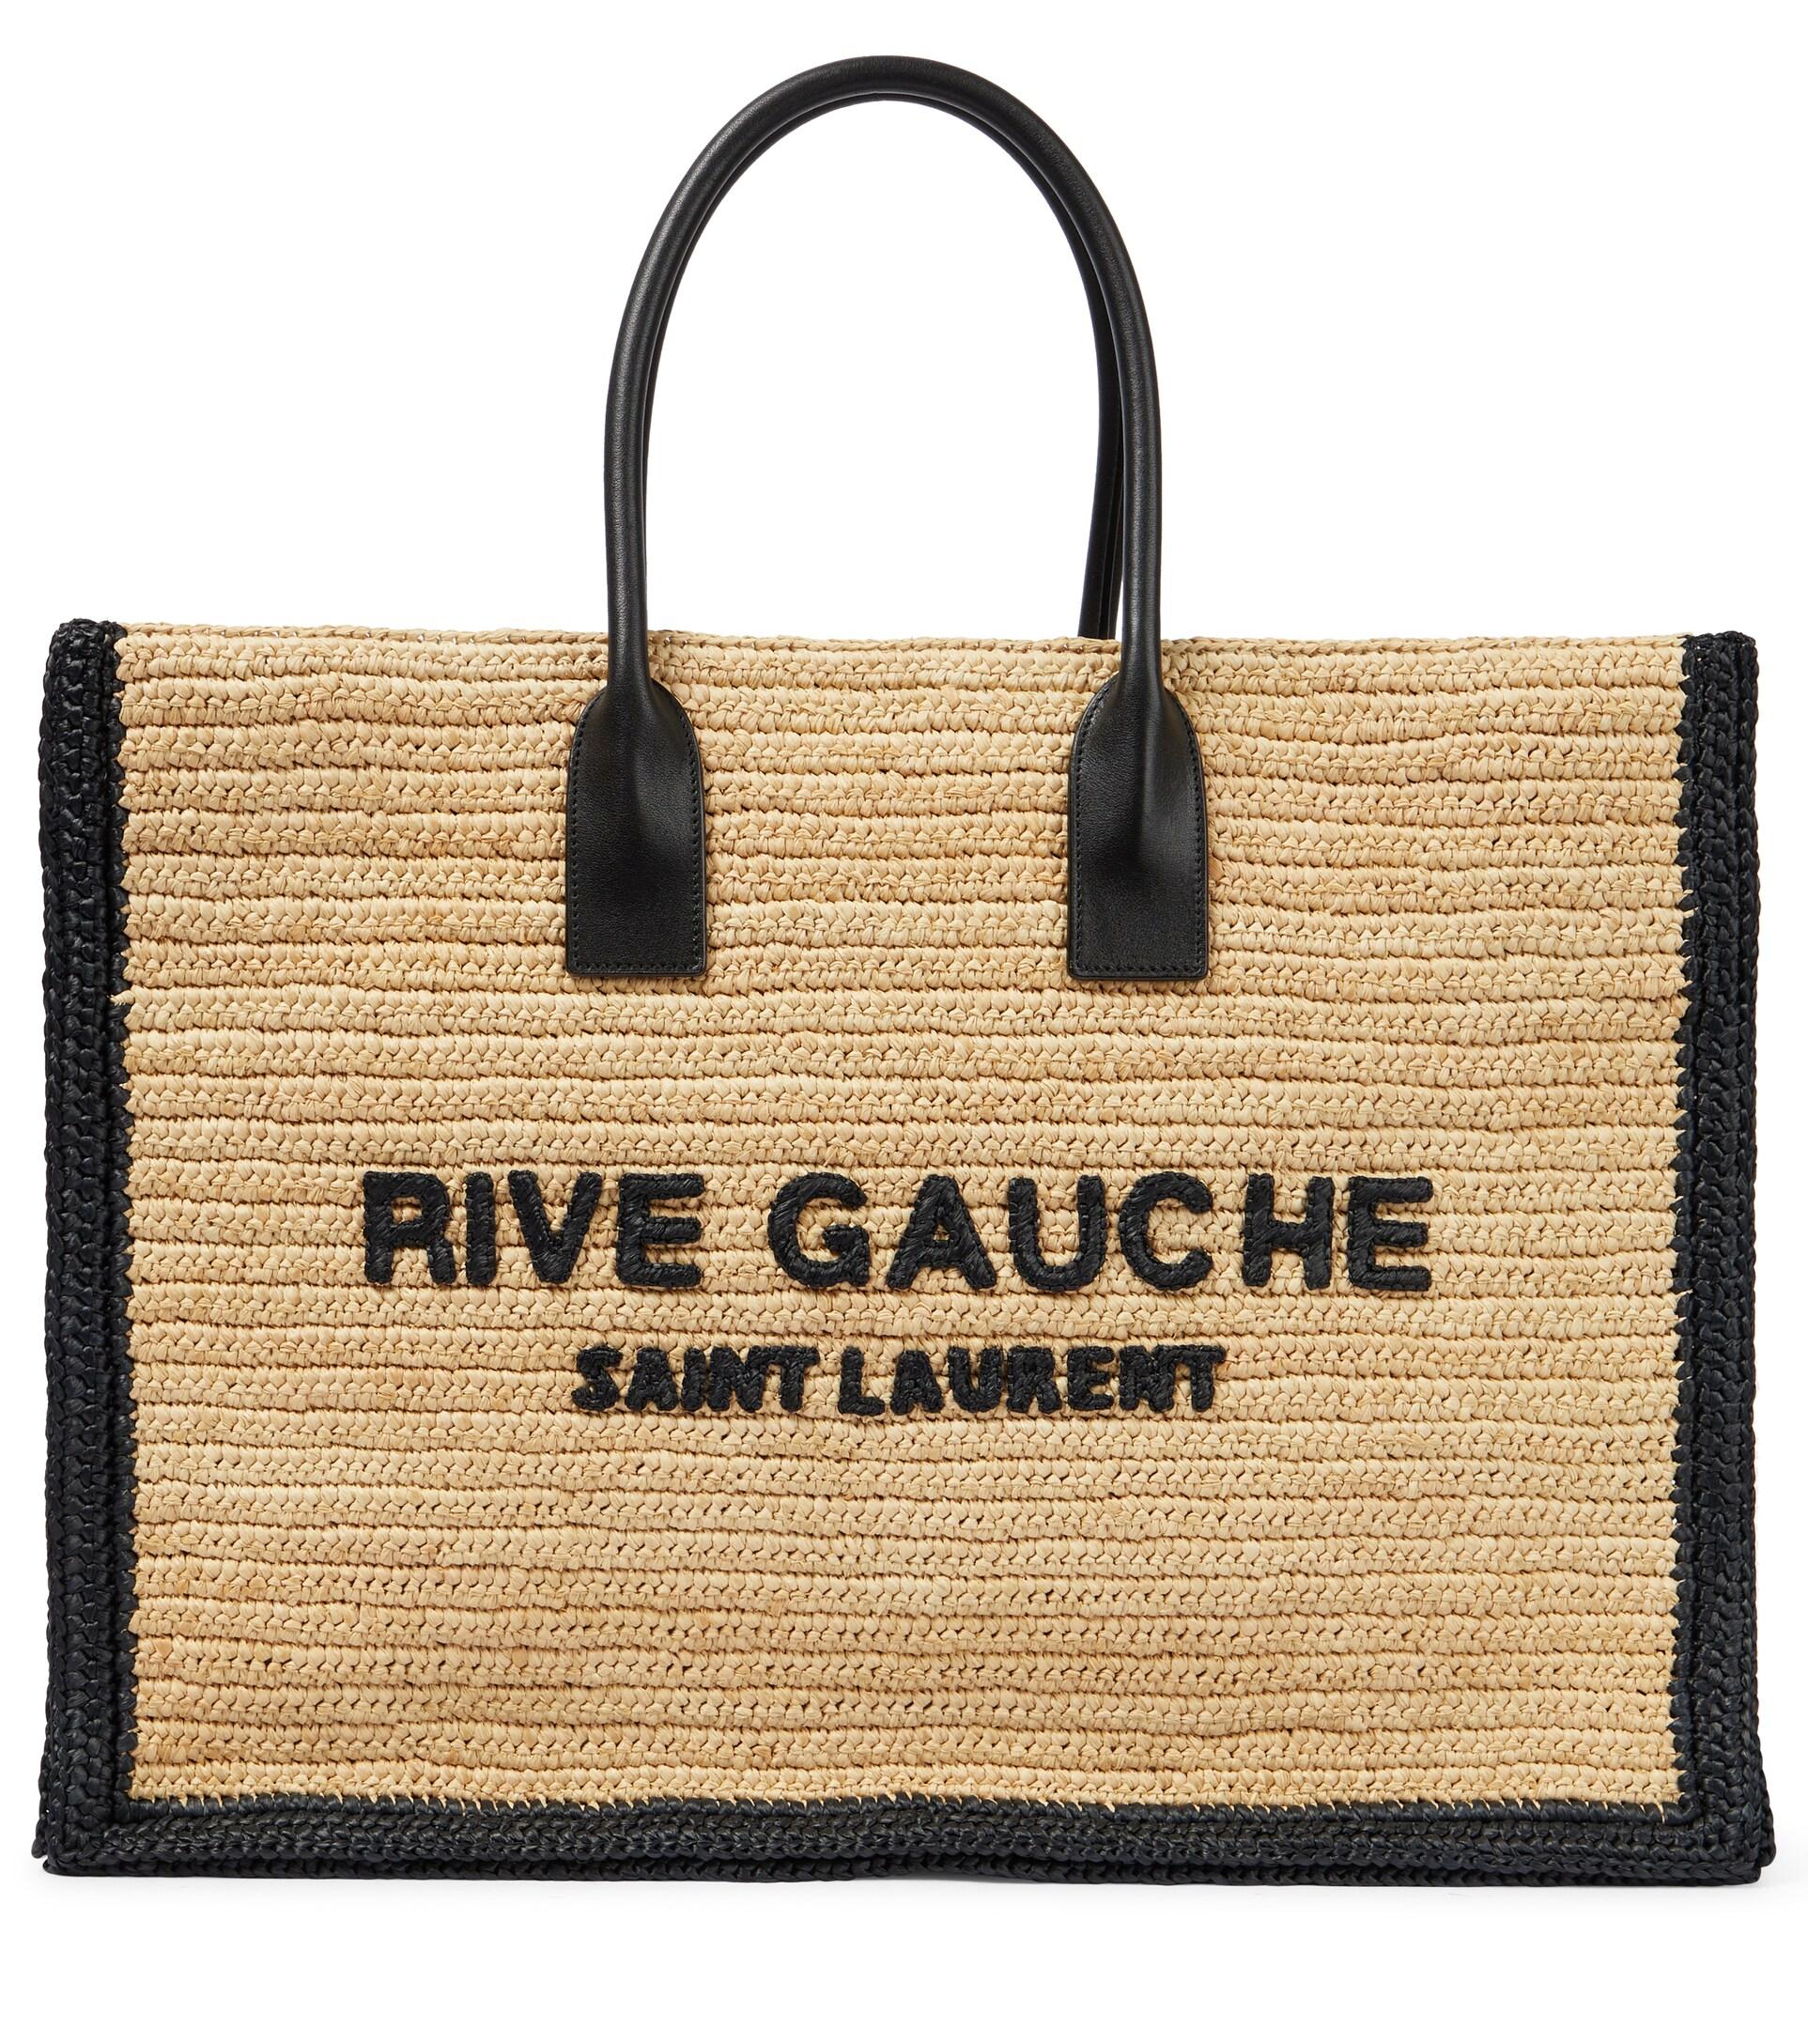 Rive Gauche Canvas Tote Bag in Beige - Saint Laurent